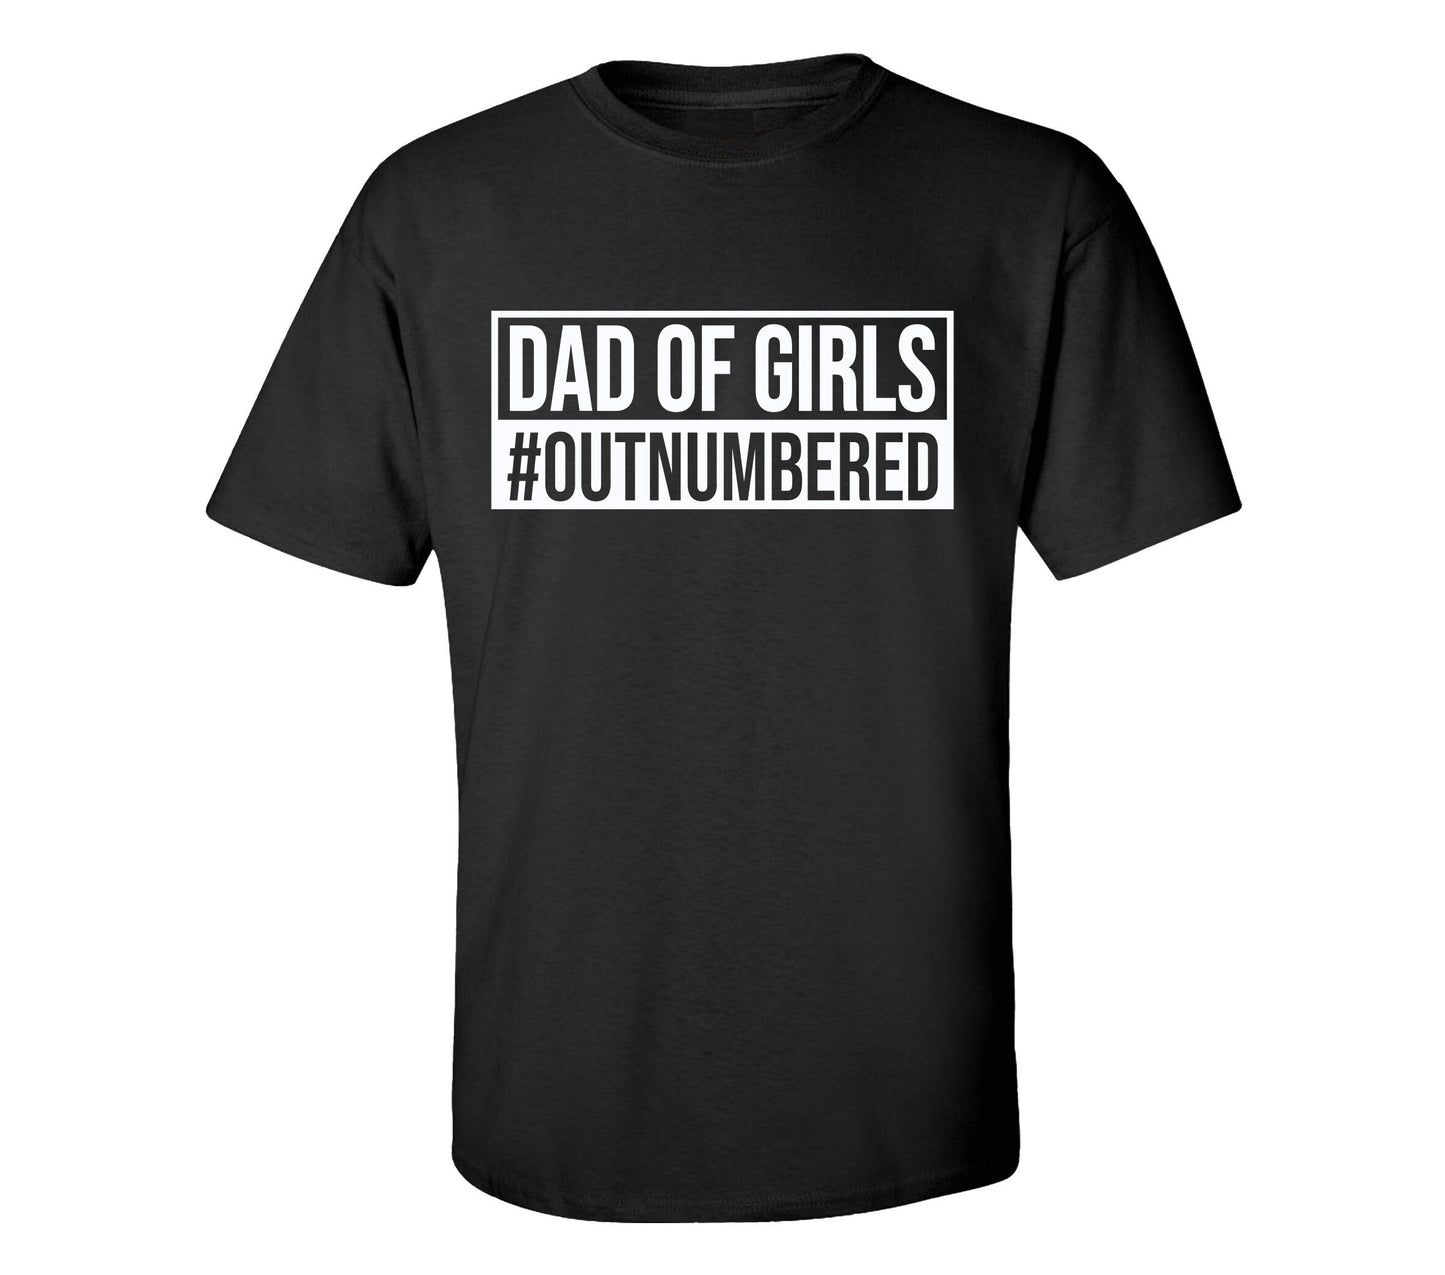 Dad of Girls #outnumbered men’s t shirt, dad t shirt, Father’s day gift, Men’s birthday gift, Father’s day t shirt, Dad of girls t shirt